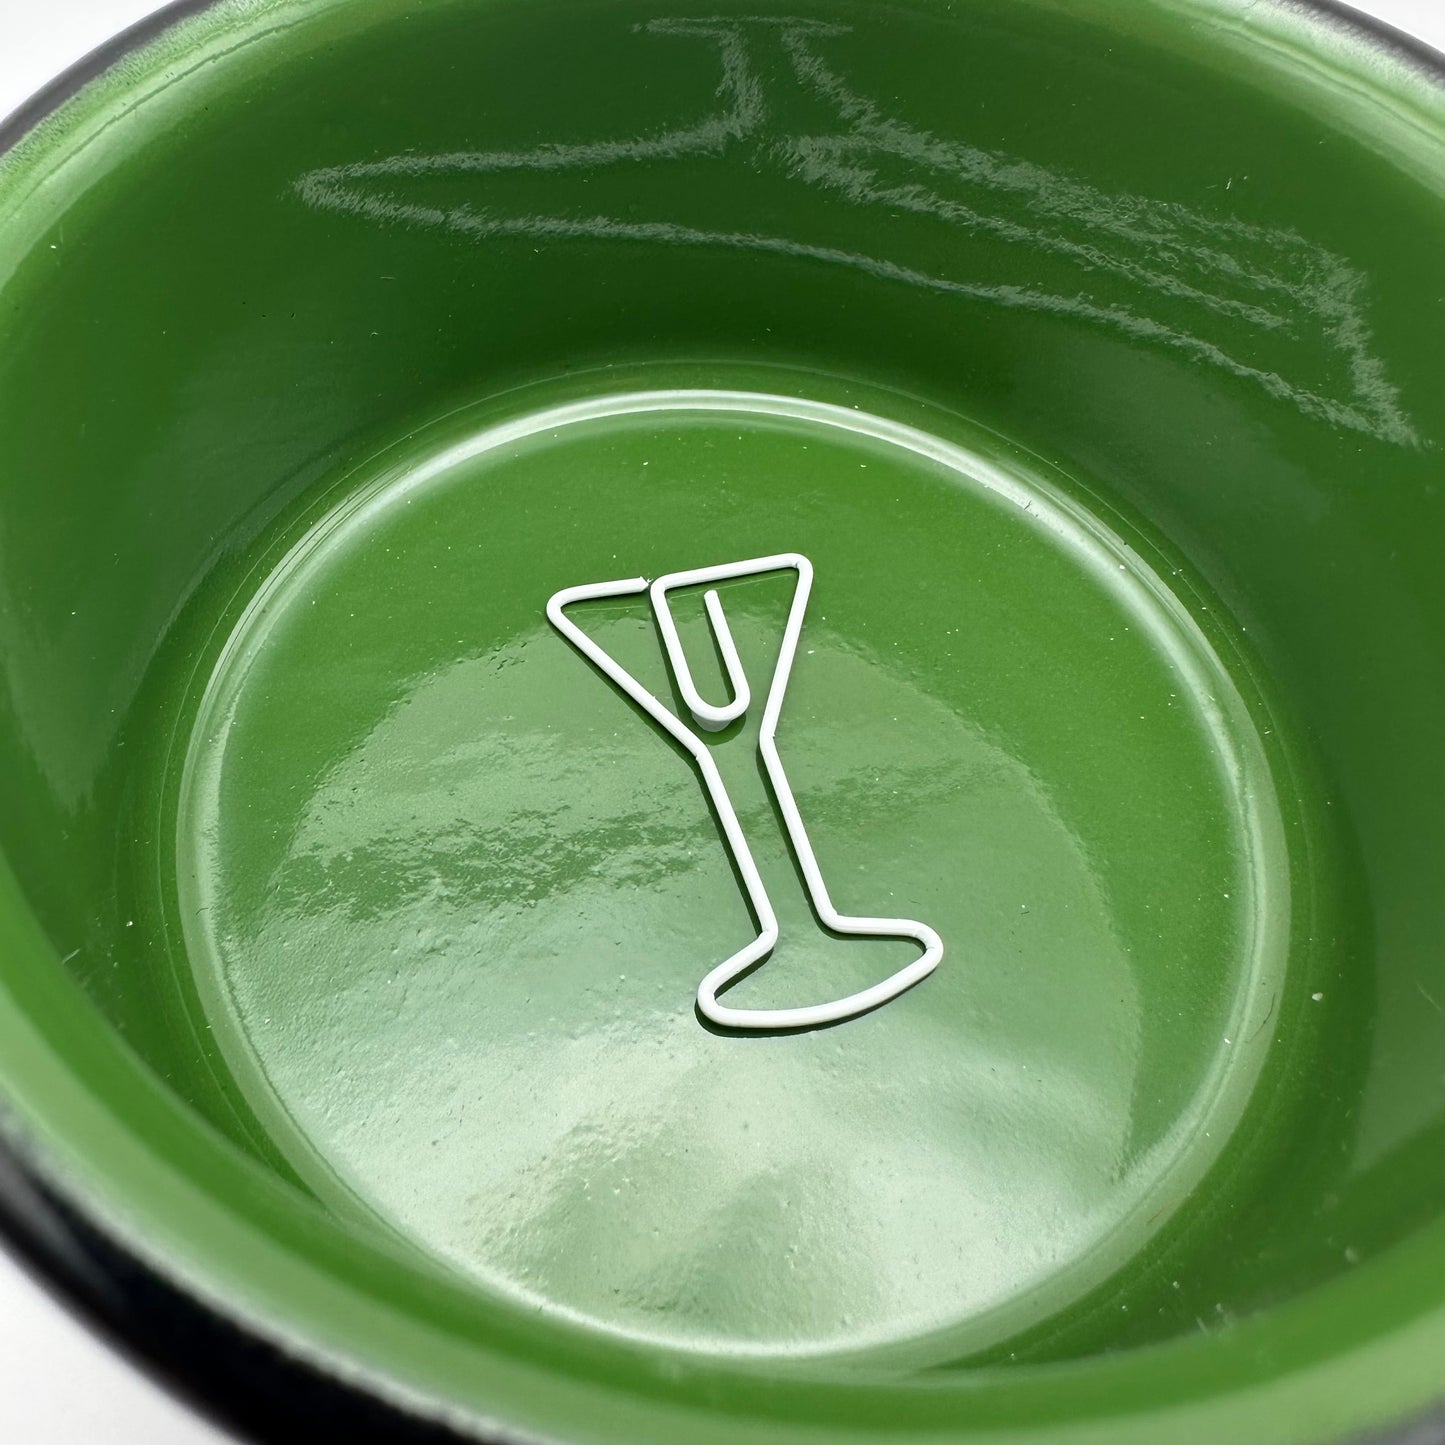 Single white martini paperclip in a green ramekin.